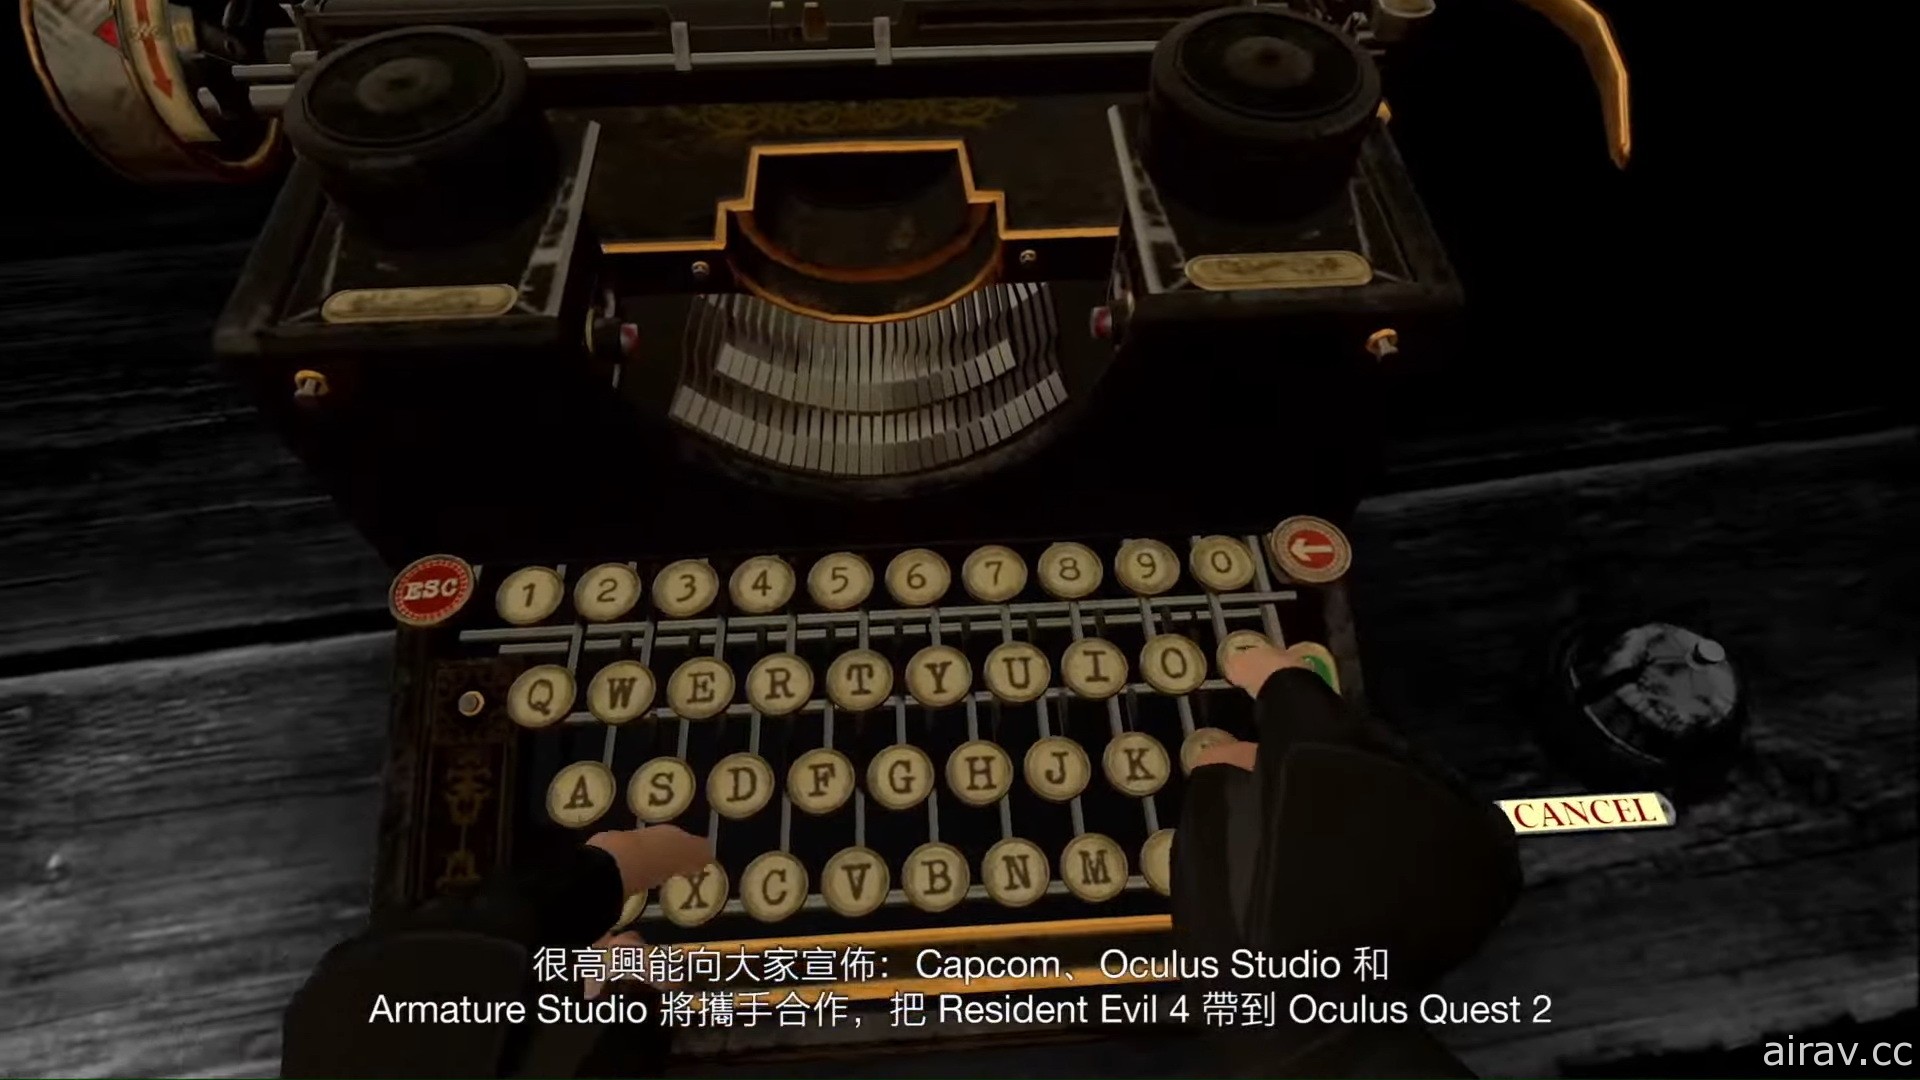 CAPCOM 宣布《惡靈古堡 4》將推出 VR 版 里昂在虛擬實境大展身手